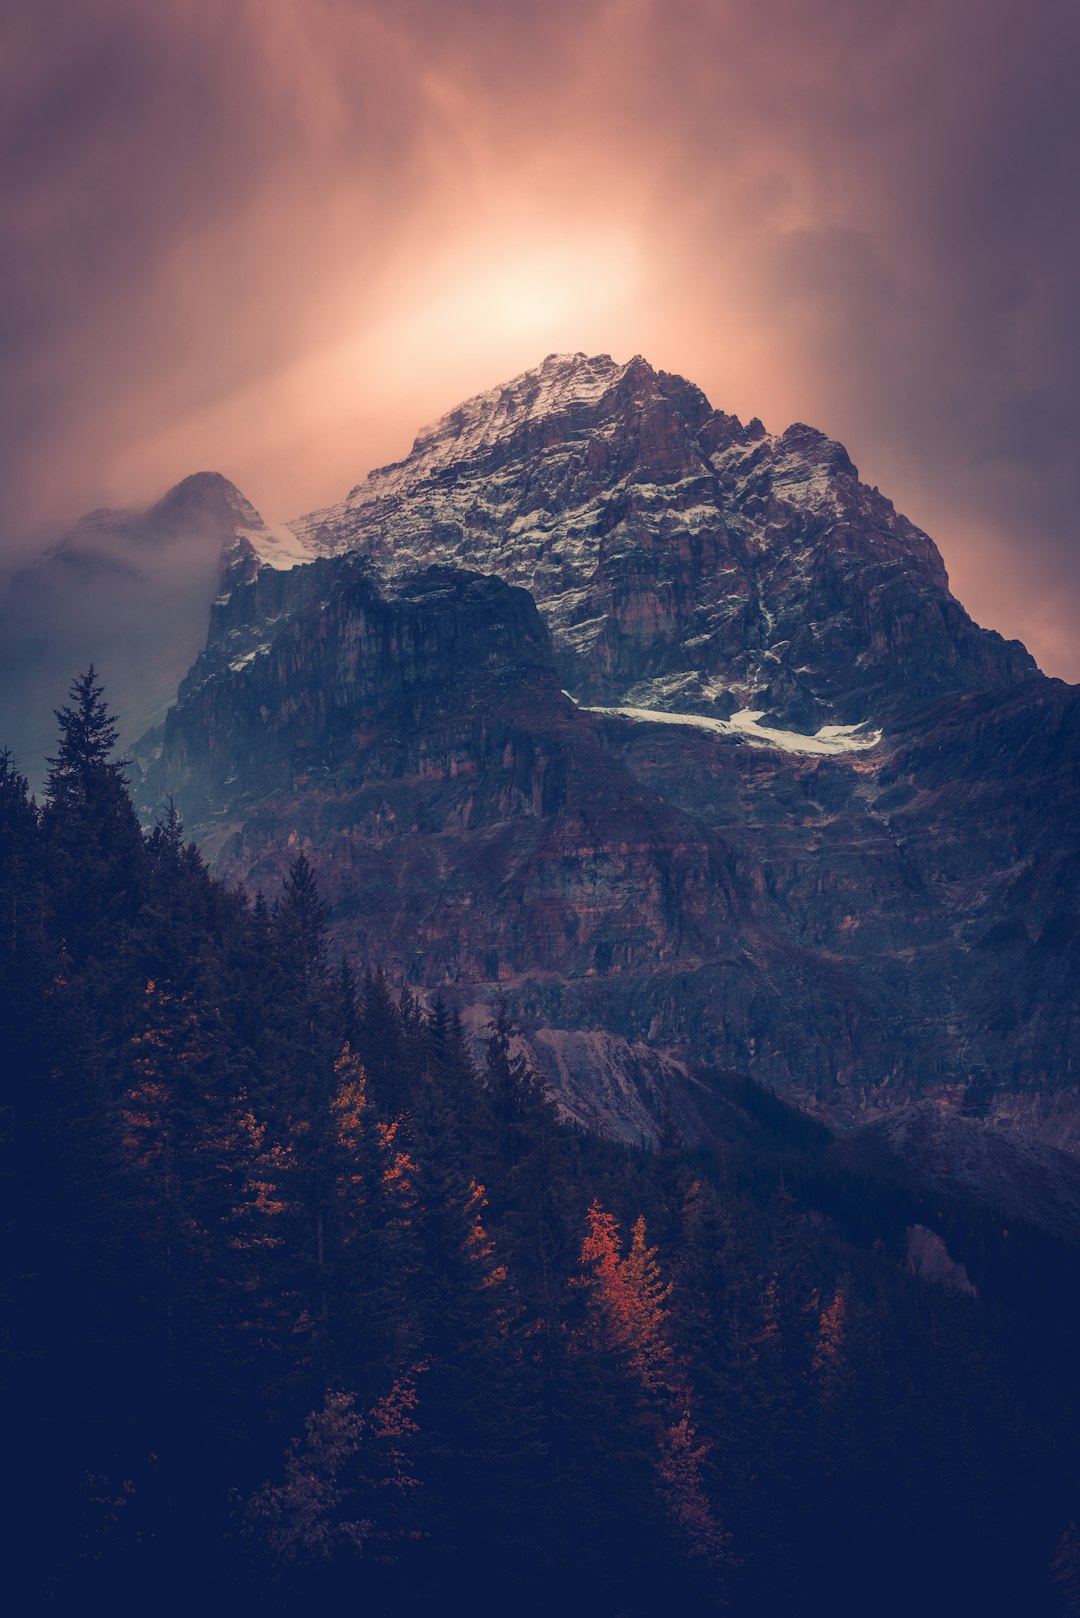 The Mountain photo by Neil Rosenstech neilrosenstech on 